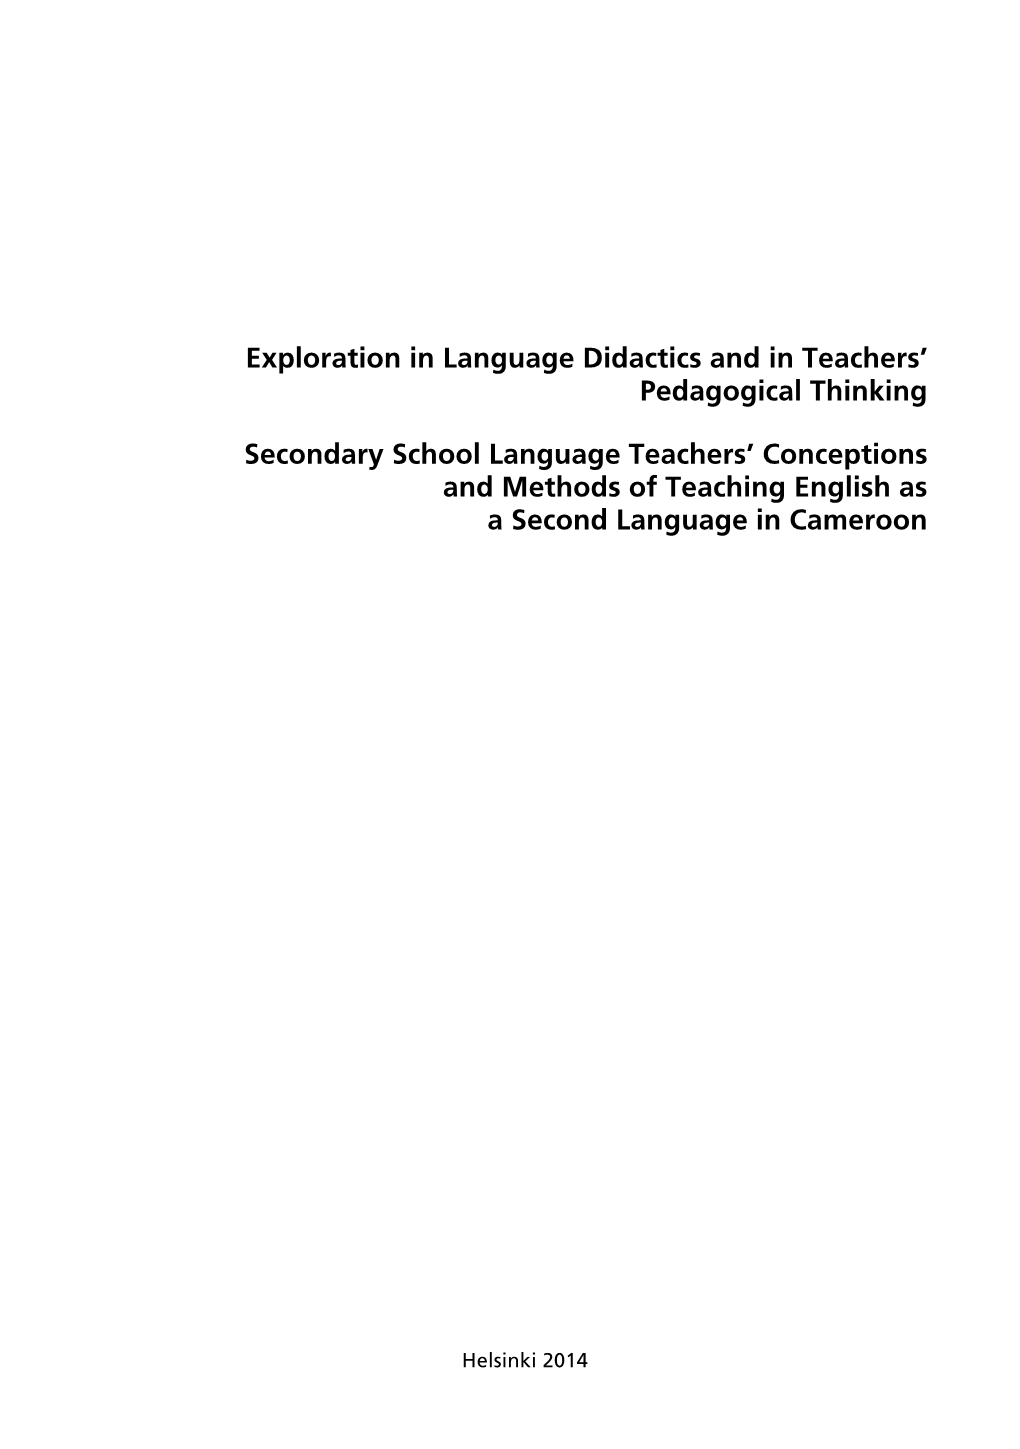 Exploration in Language Didactics and in Teachers' Pedagogical